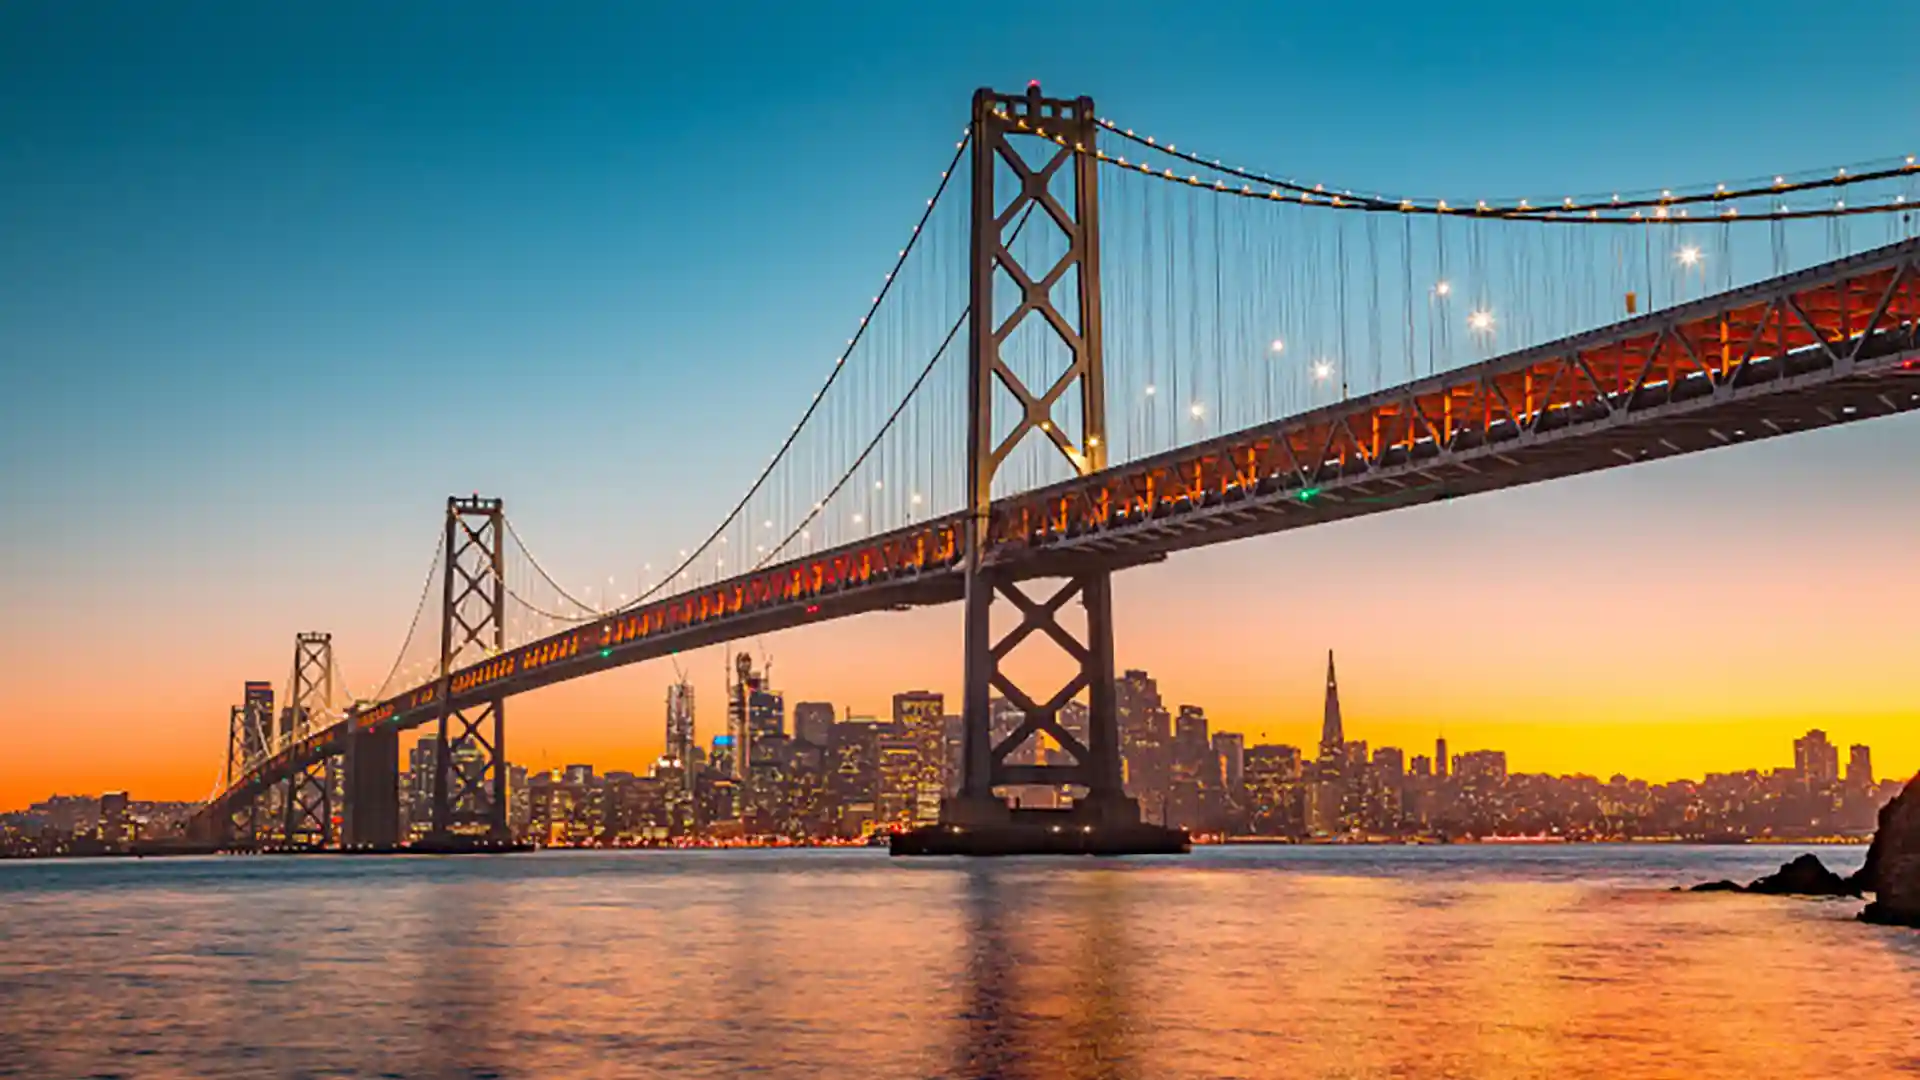 View of Golden Gate Bridge in San Francisco during sunset.